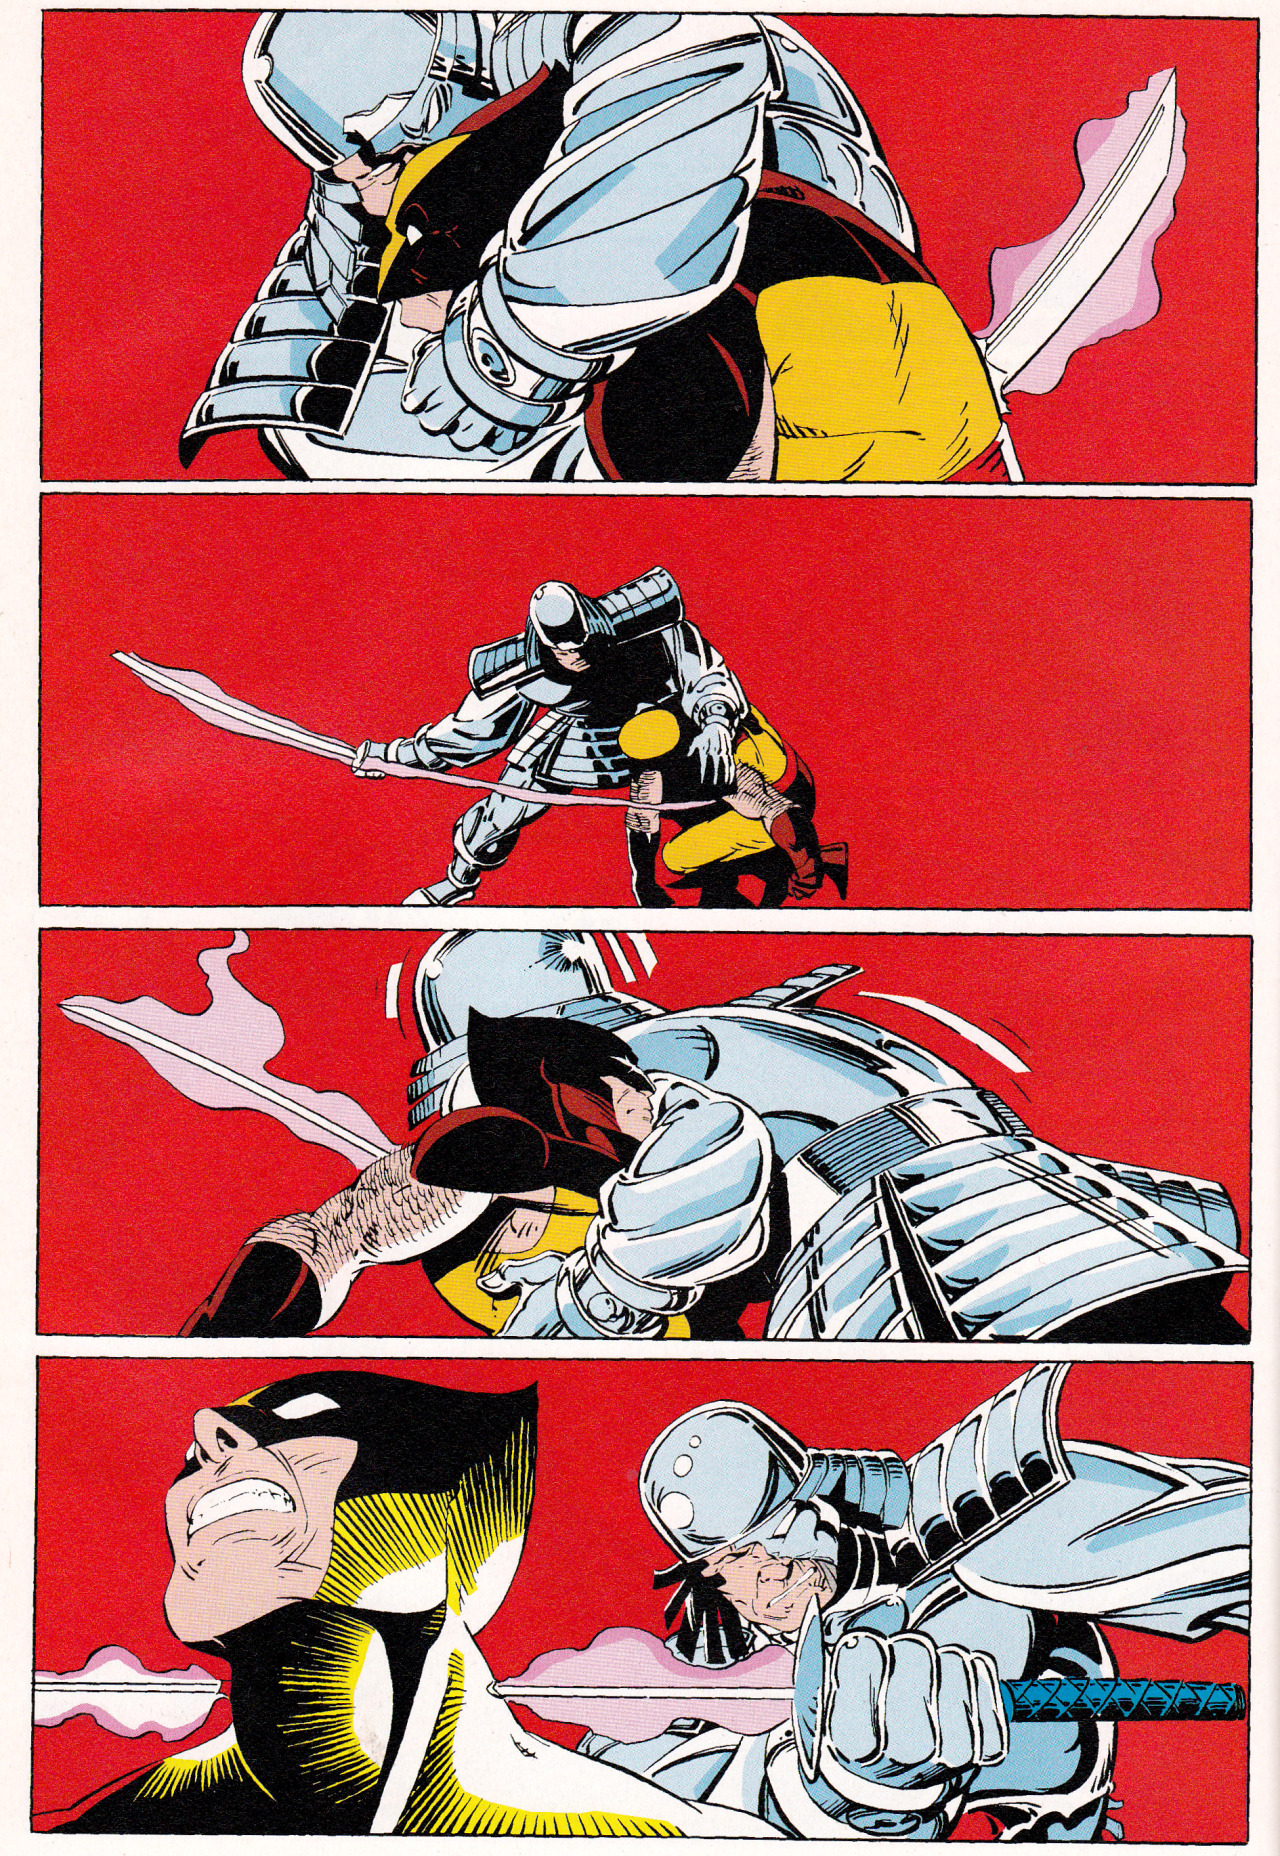 jthenr-comics-vault:
“ Wolverine vs Silver Samurai
From Uncanny X-Men #173 (1983)
Art by Paul Smith, Story by Chris Claremont
”